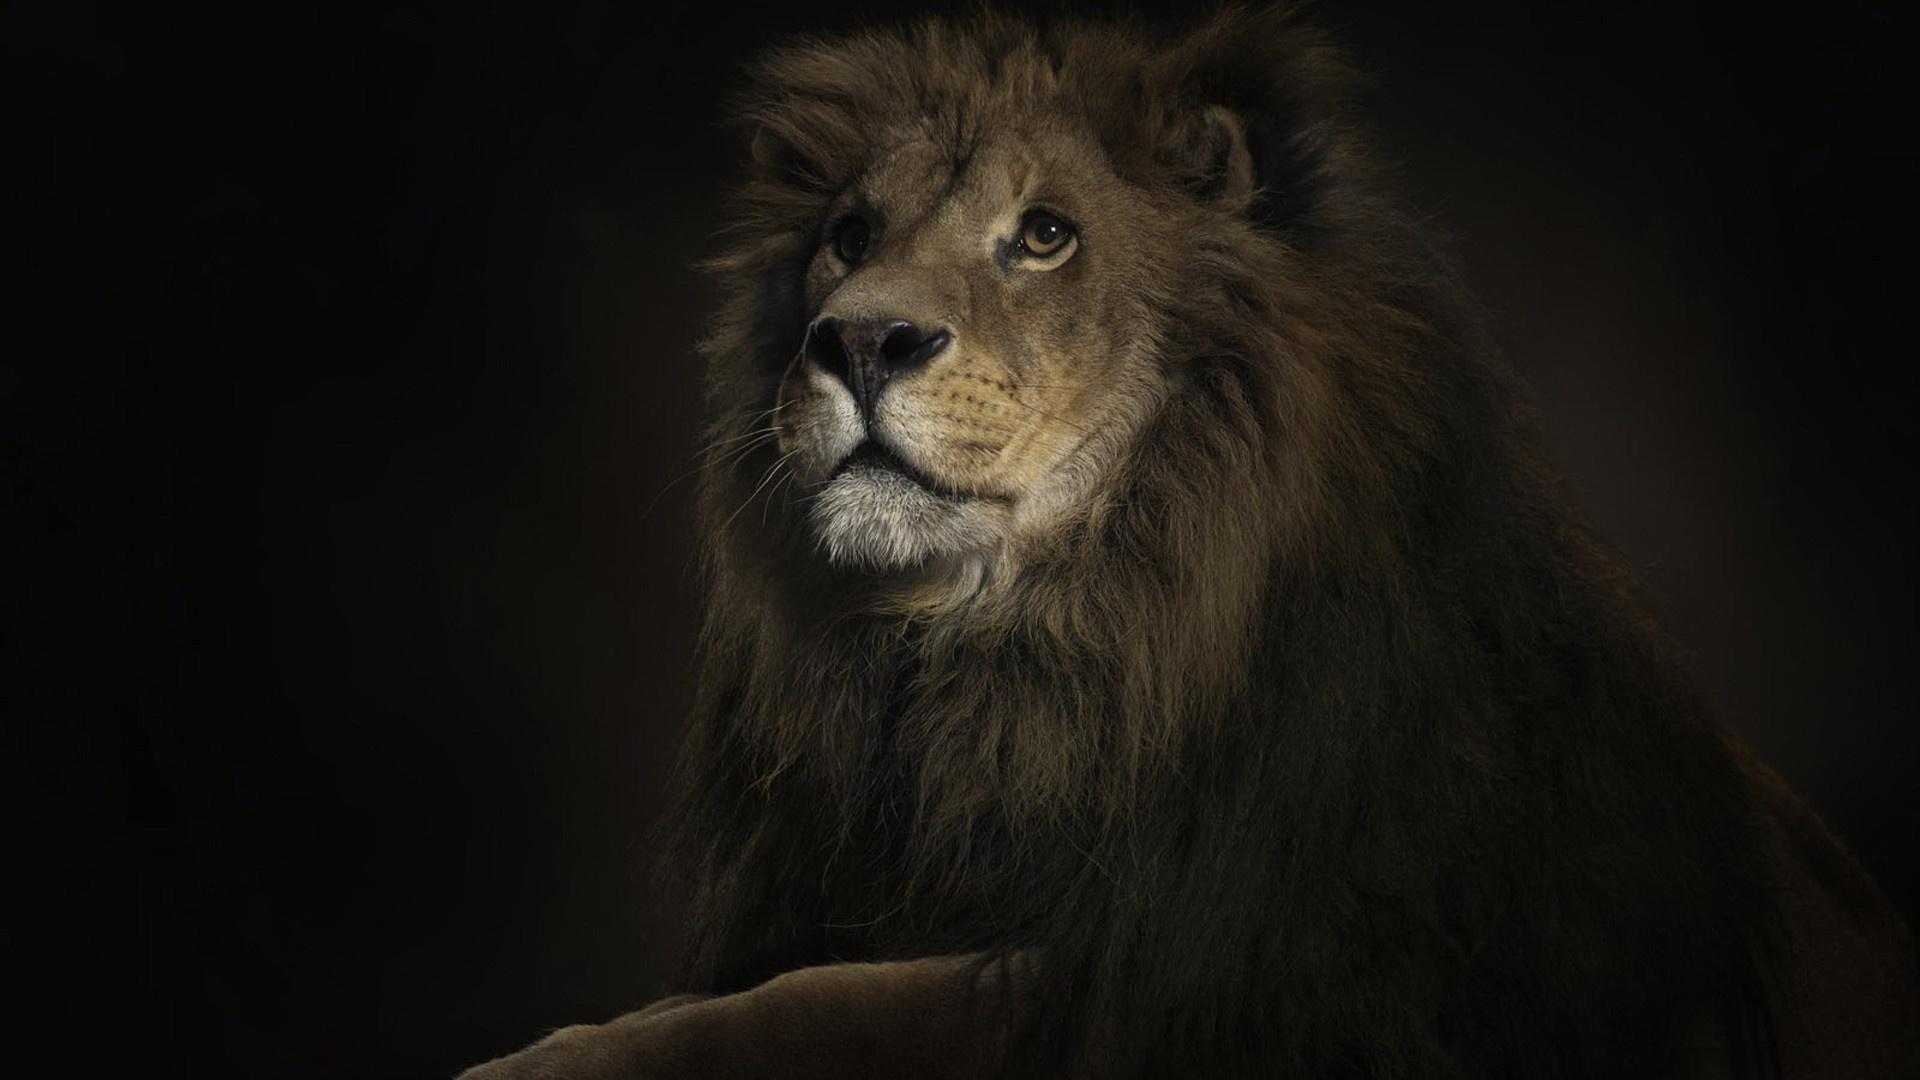 Wallpaper Of Lion